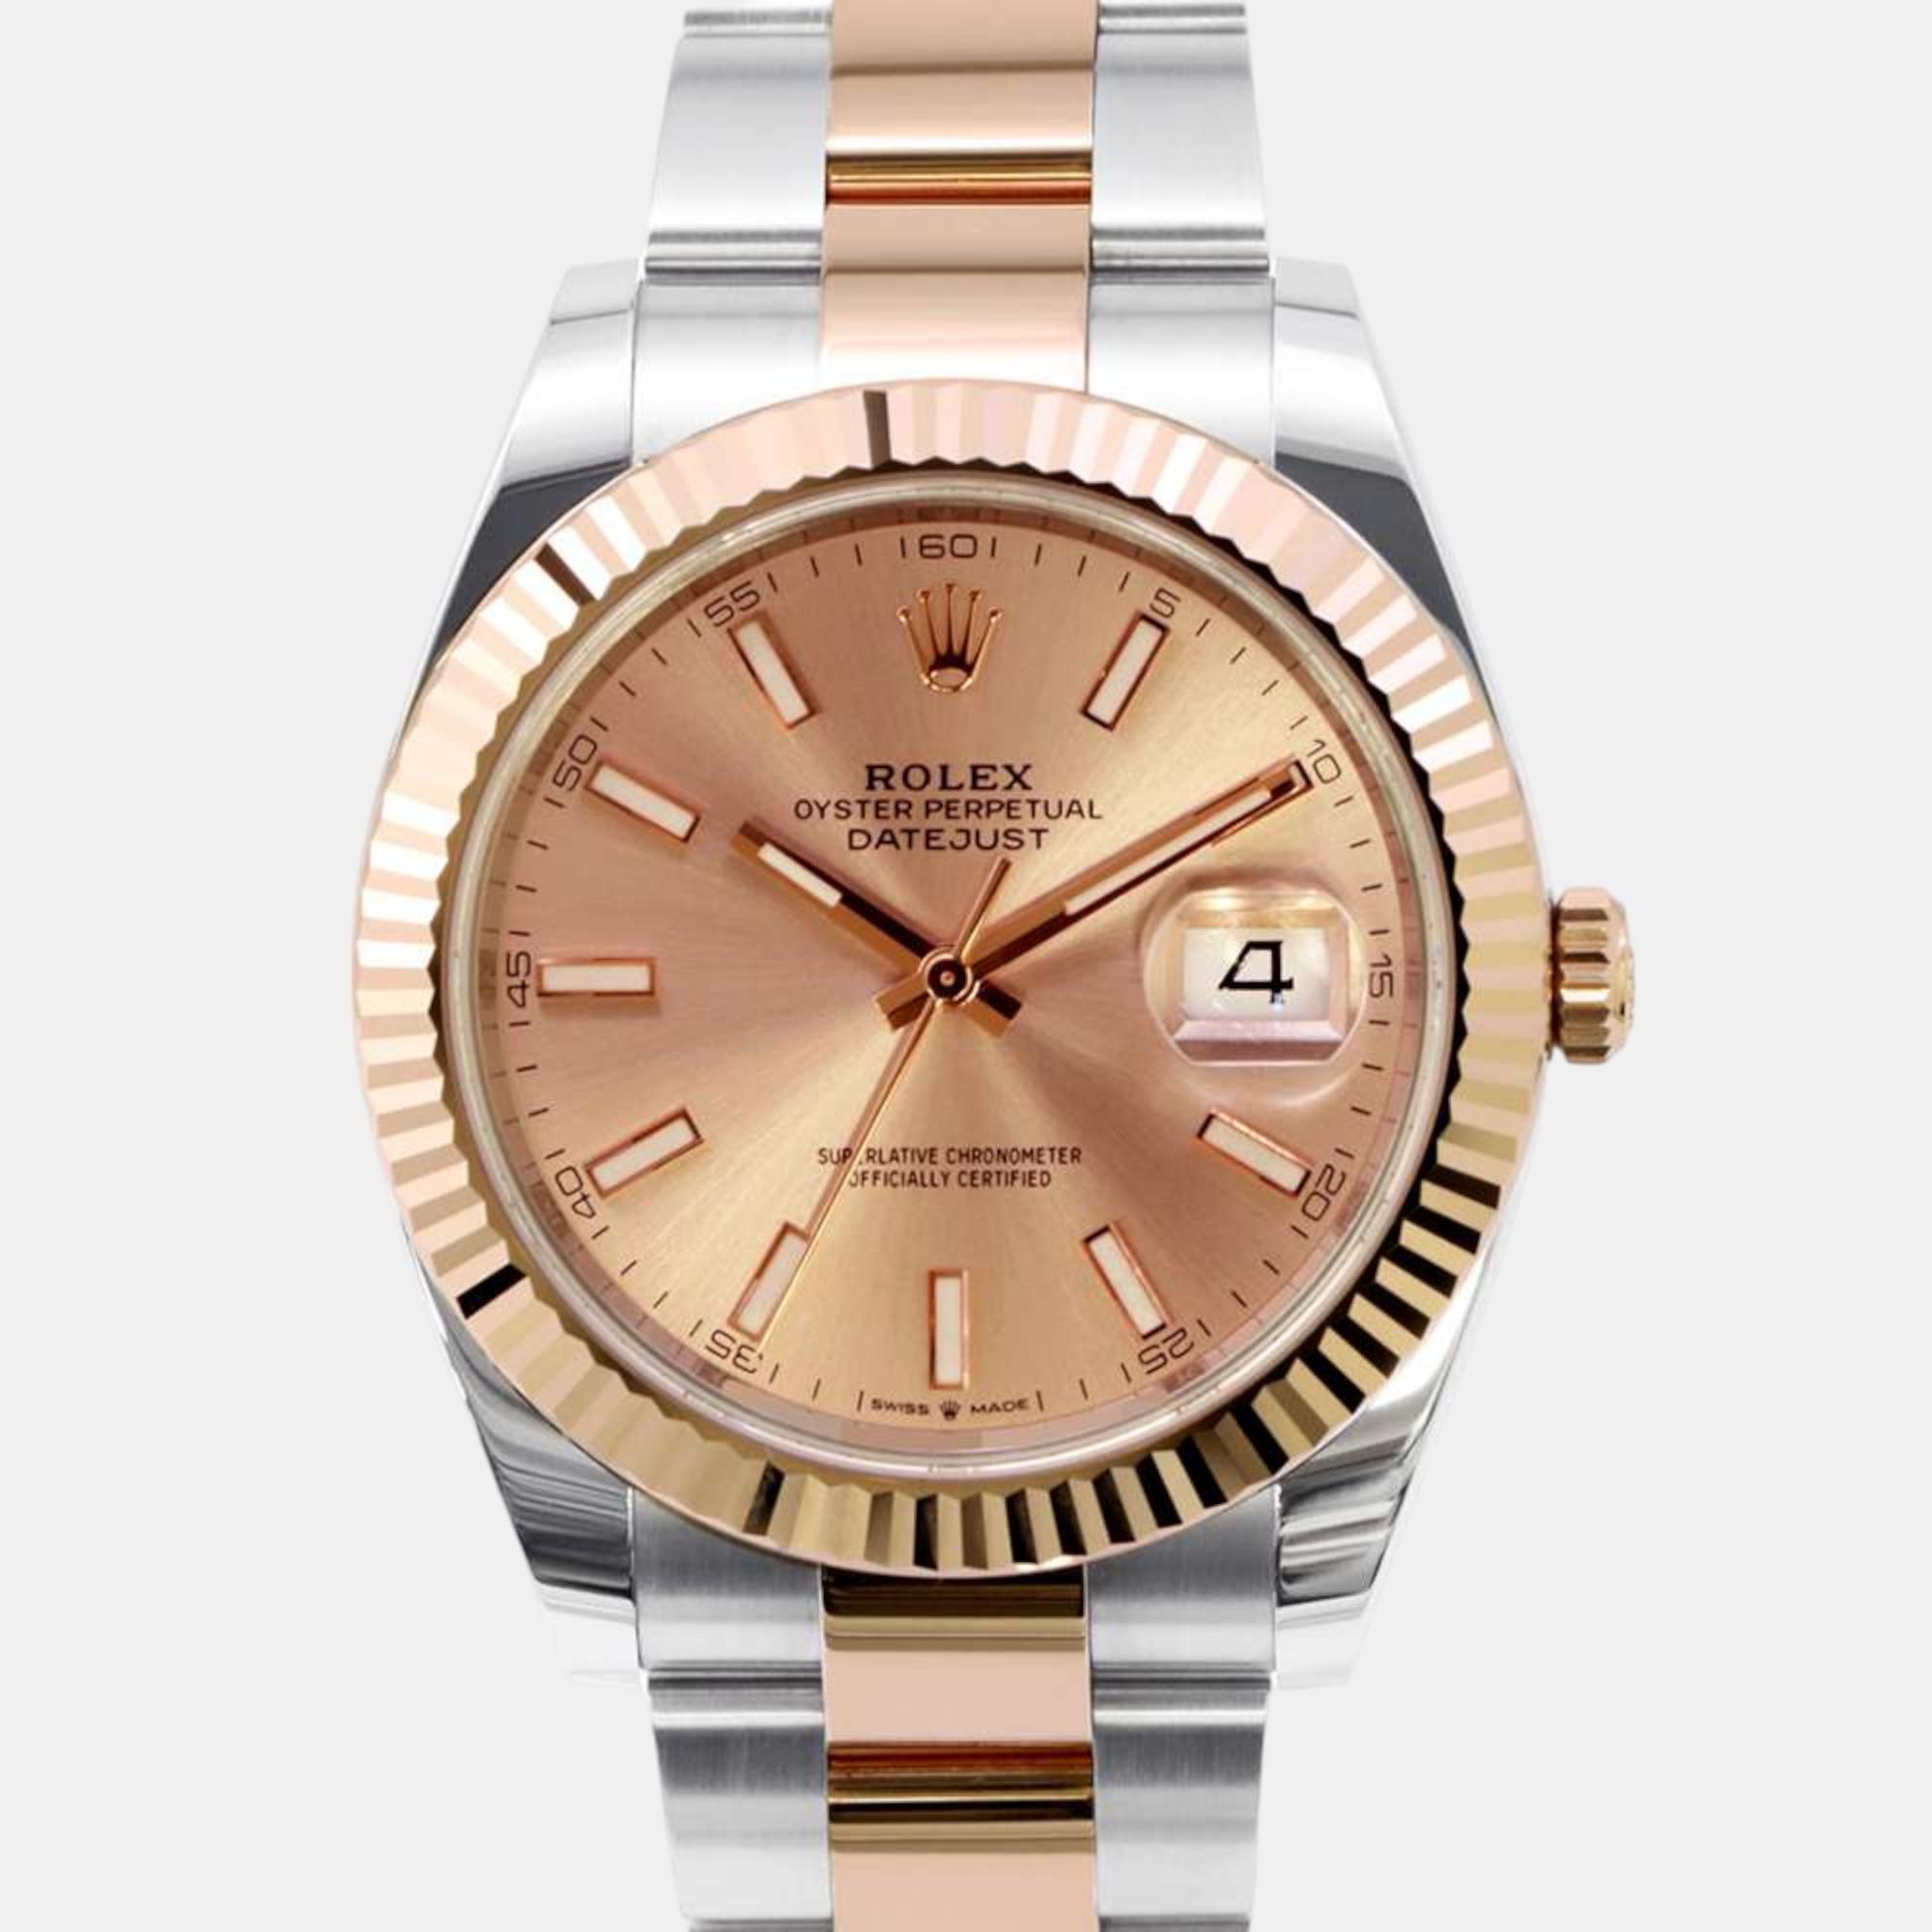 Rolex sundust 18k rose gold stainless steel datejust automatic men's wristwatch 41 mm